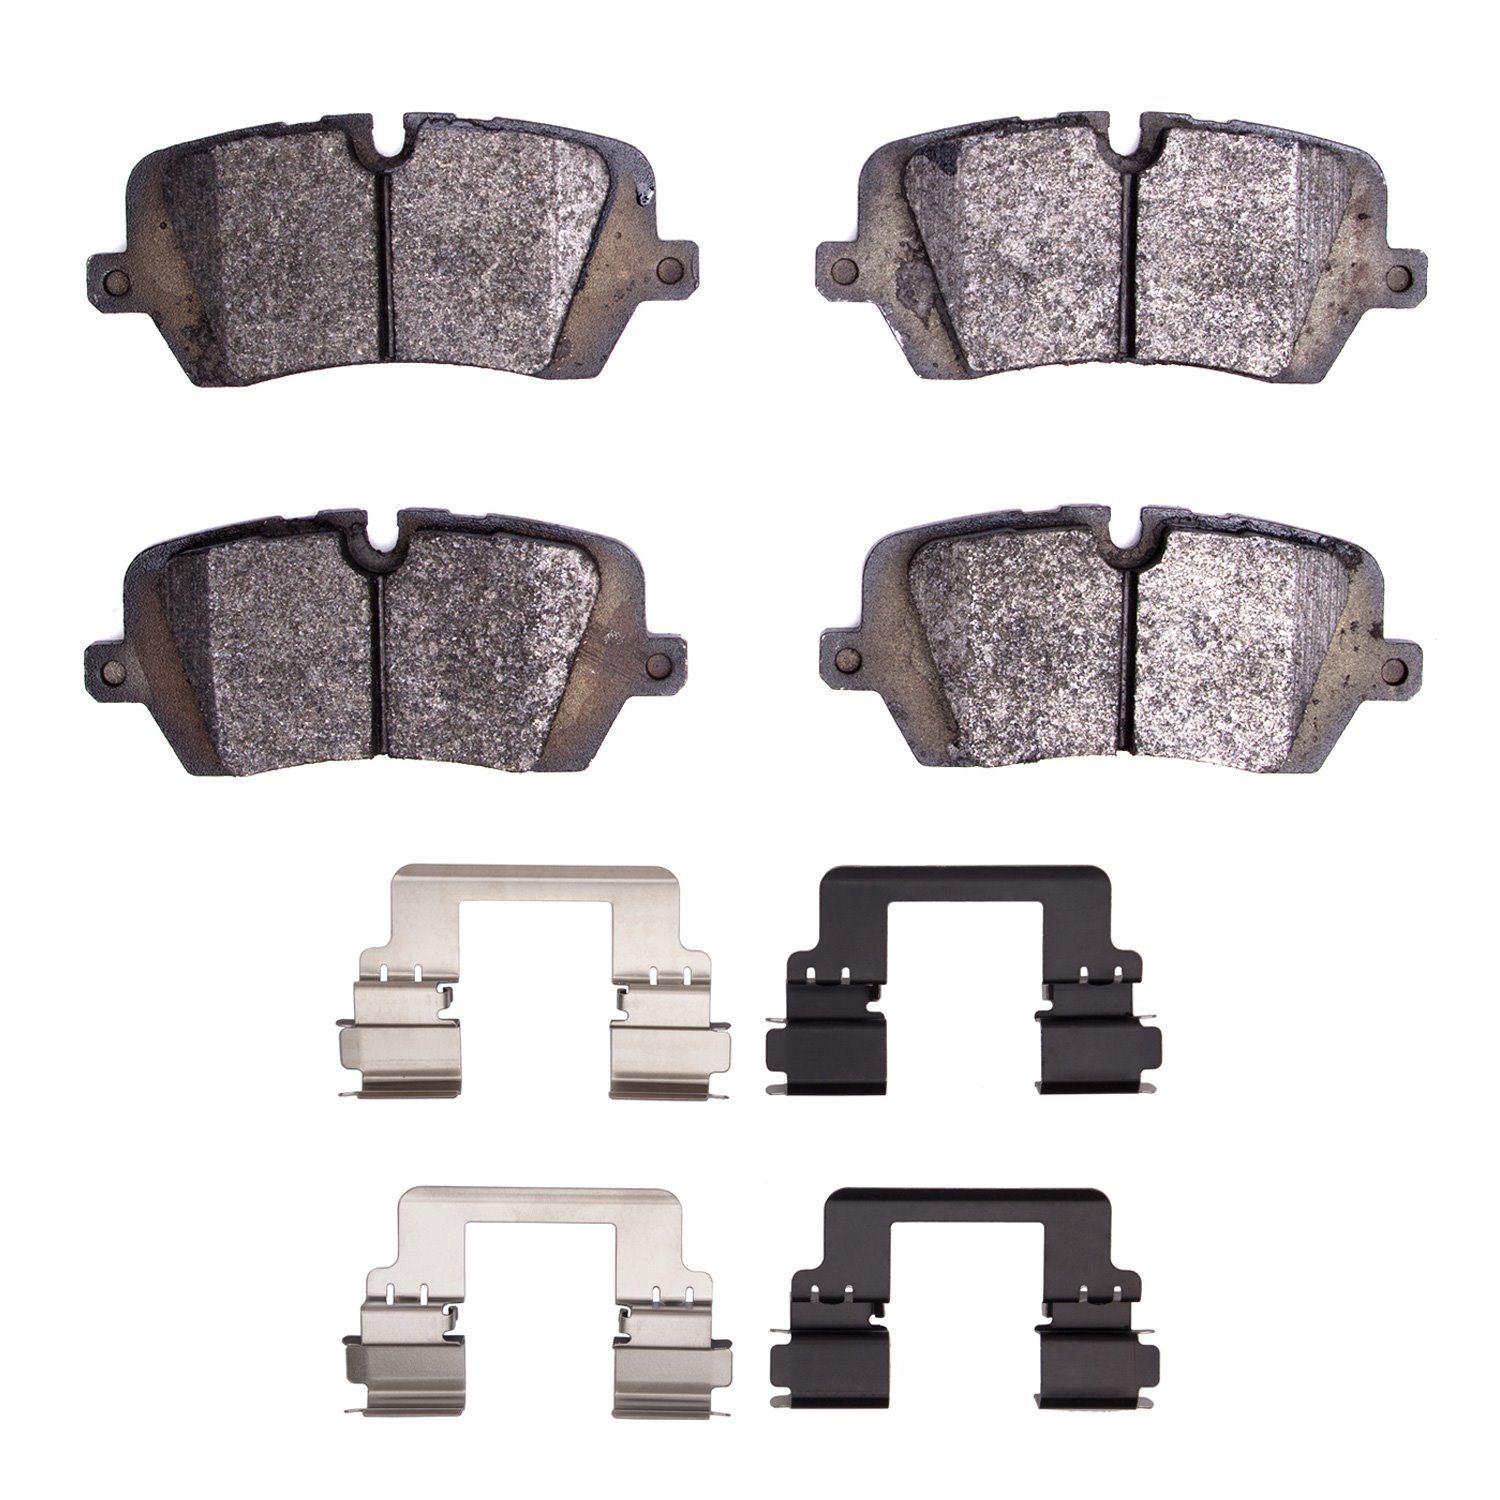 1552-1692-01 5000 Advanced Ceramic Brake Pads & Hardware Kit, Fits Select Land Rover, Position: Rear